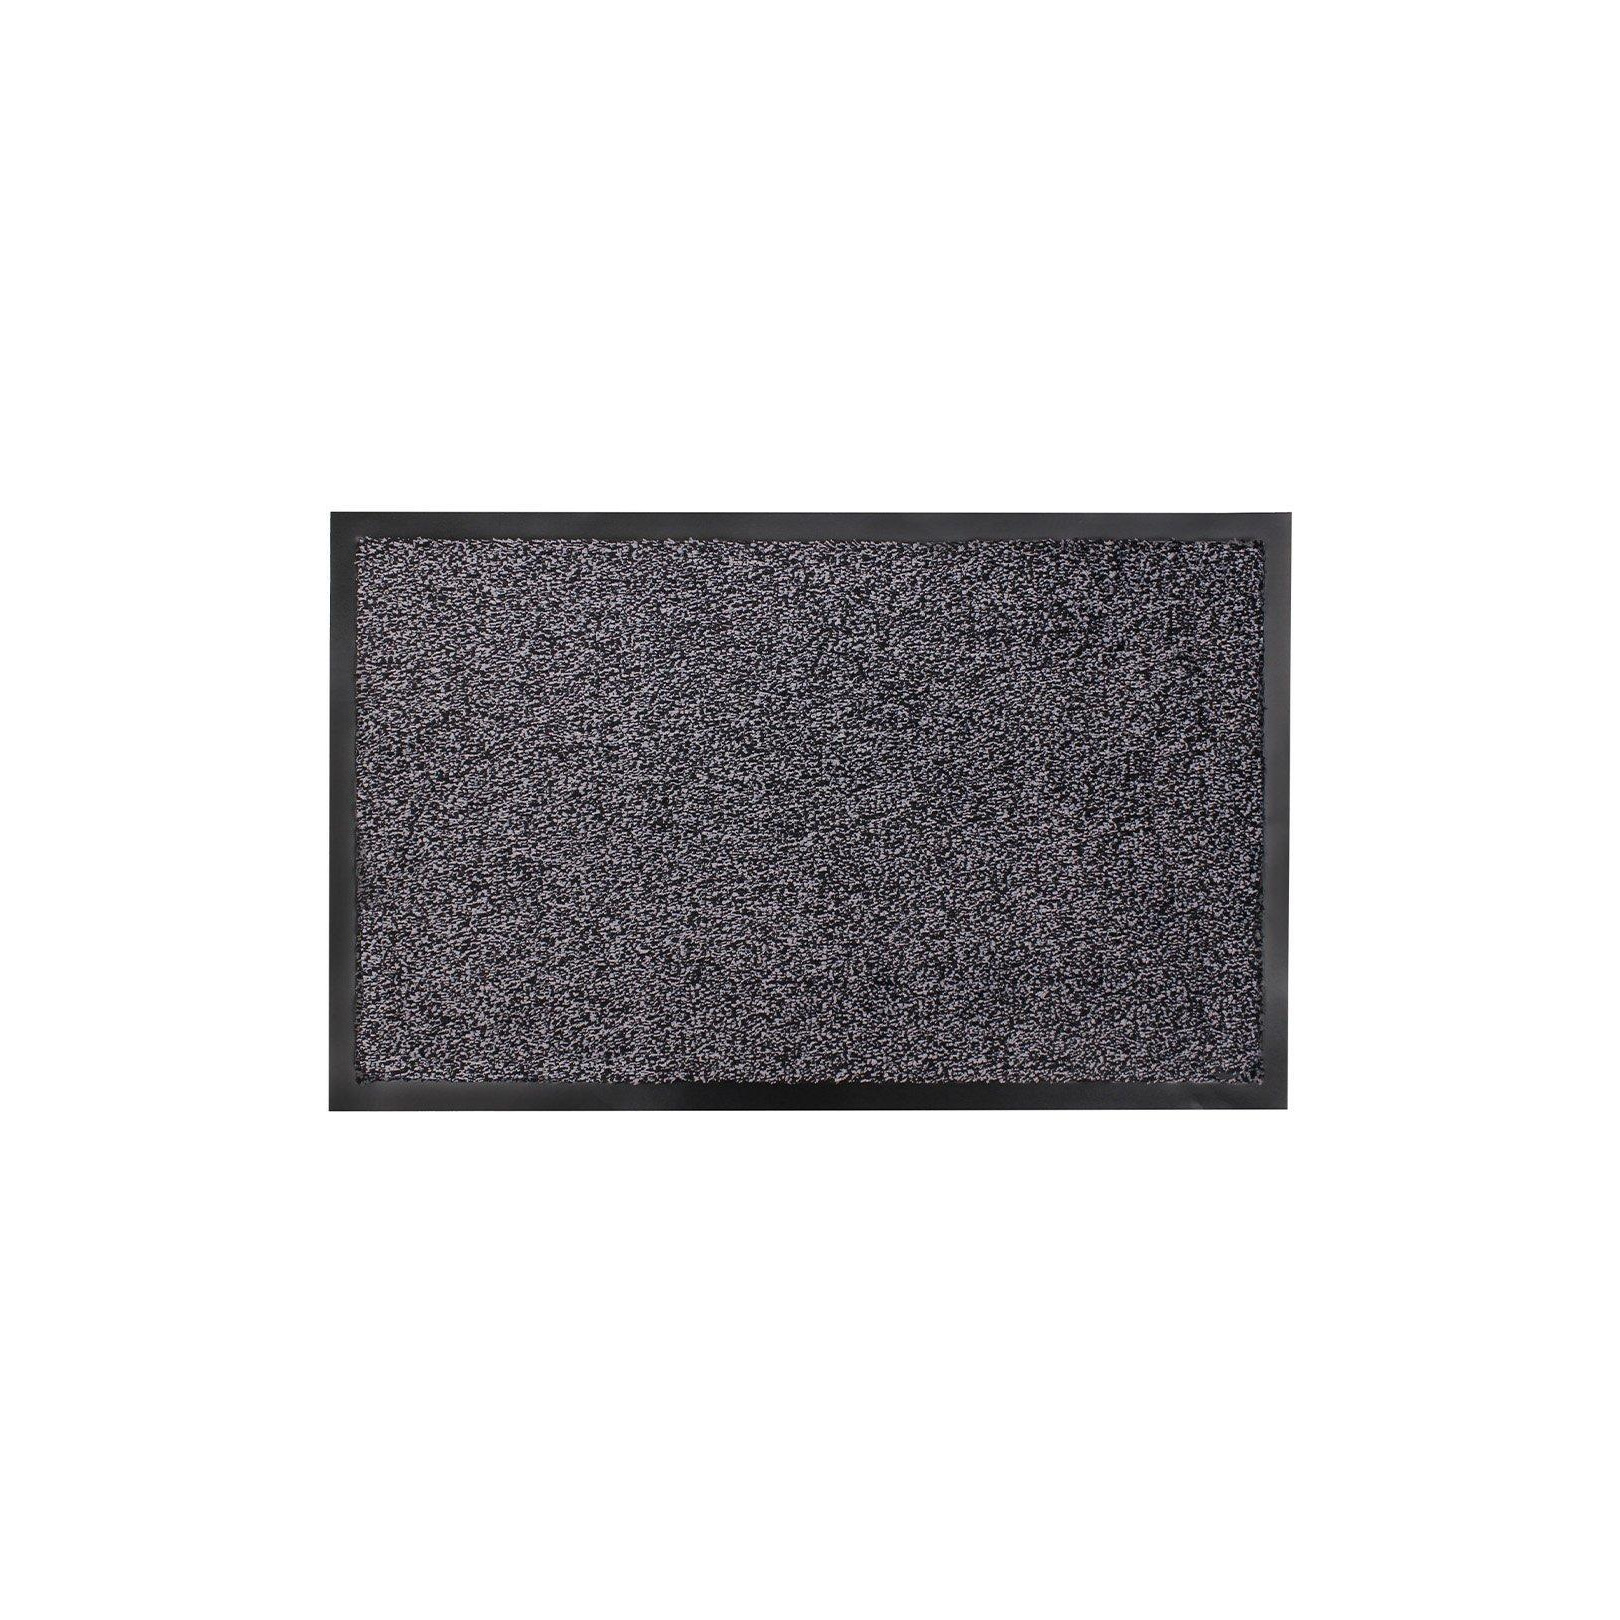 Admiral Machine Washable Micorfibre Barrier Doormat 50x80cm Charcoal - image 1